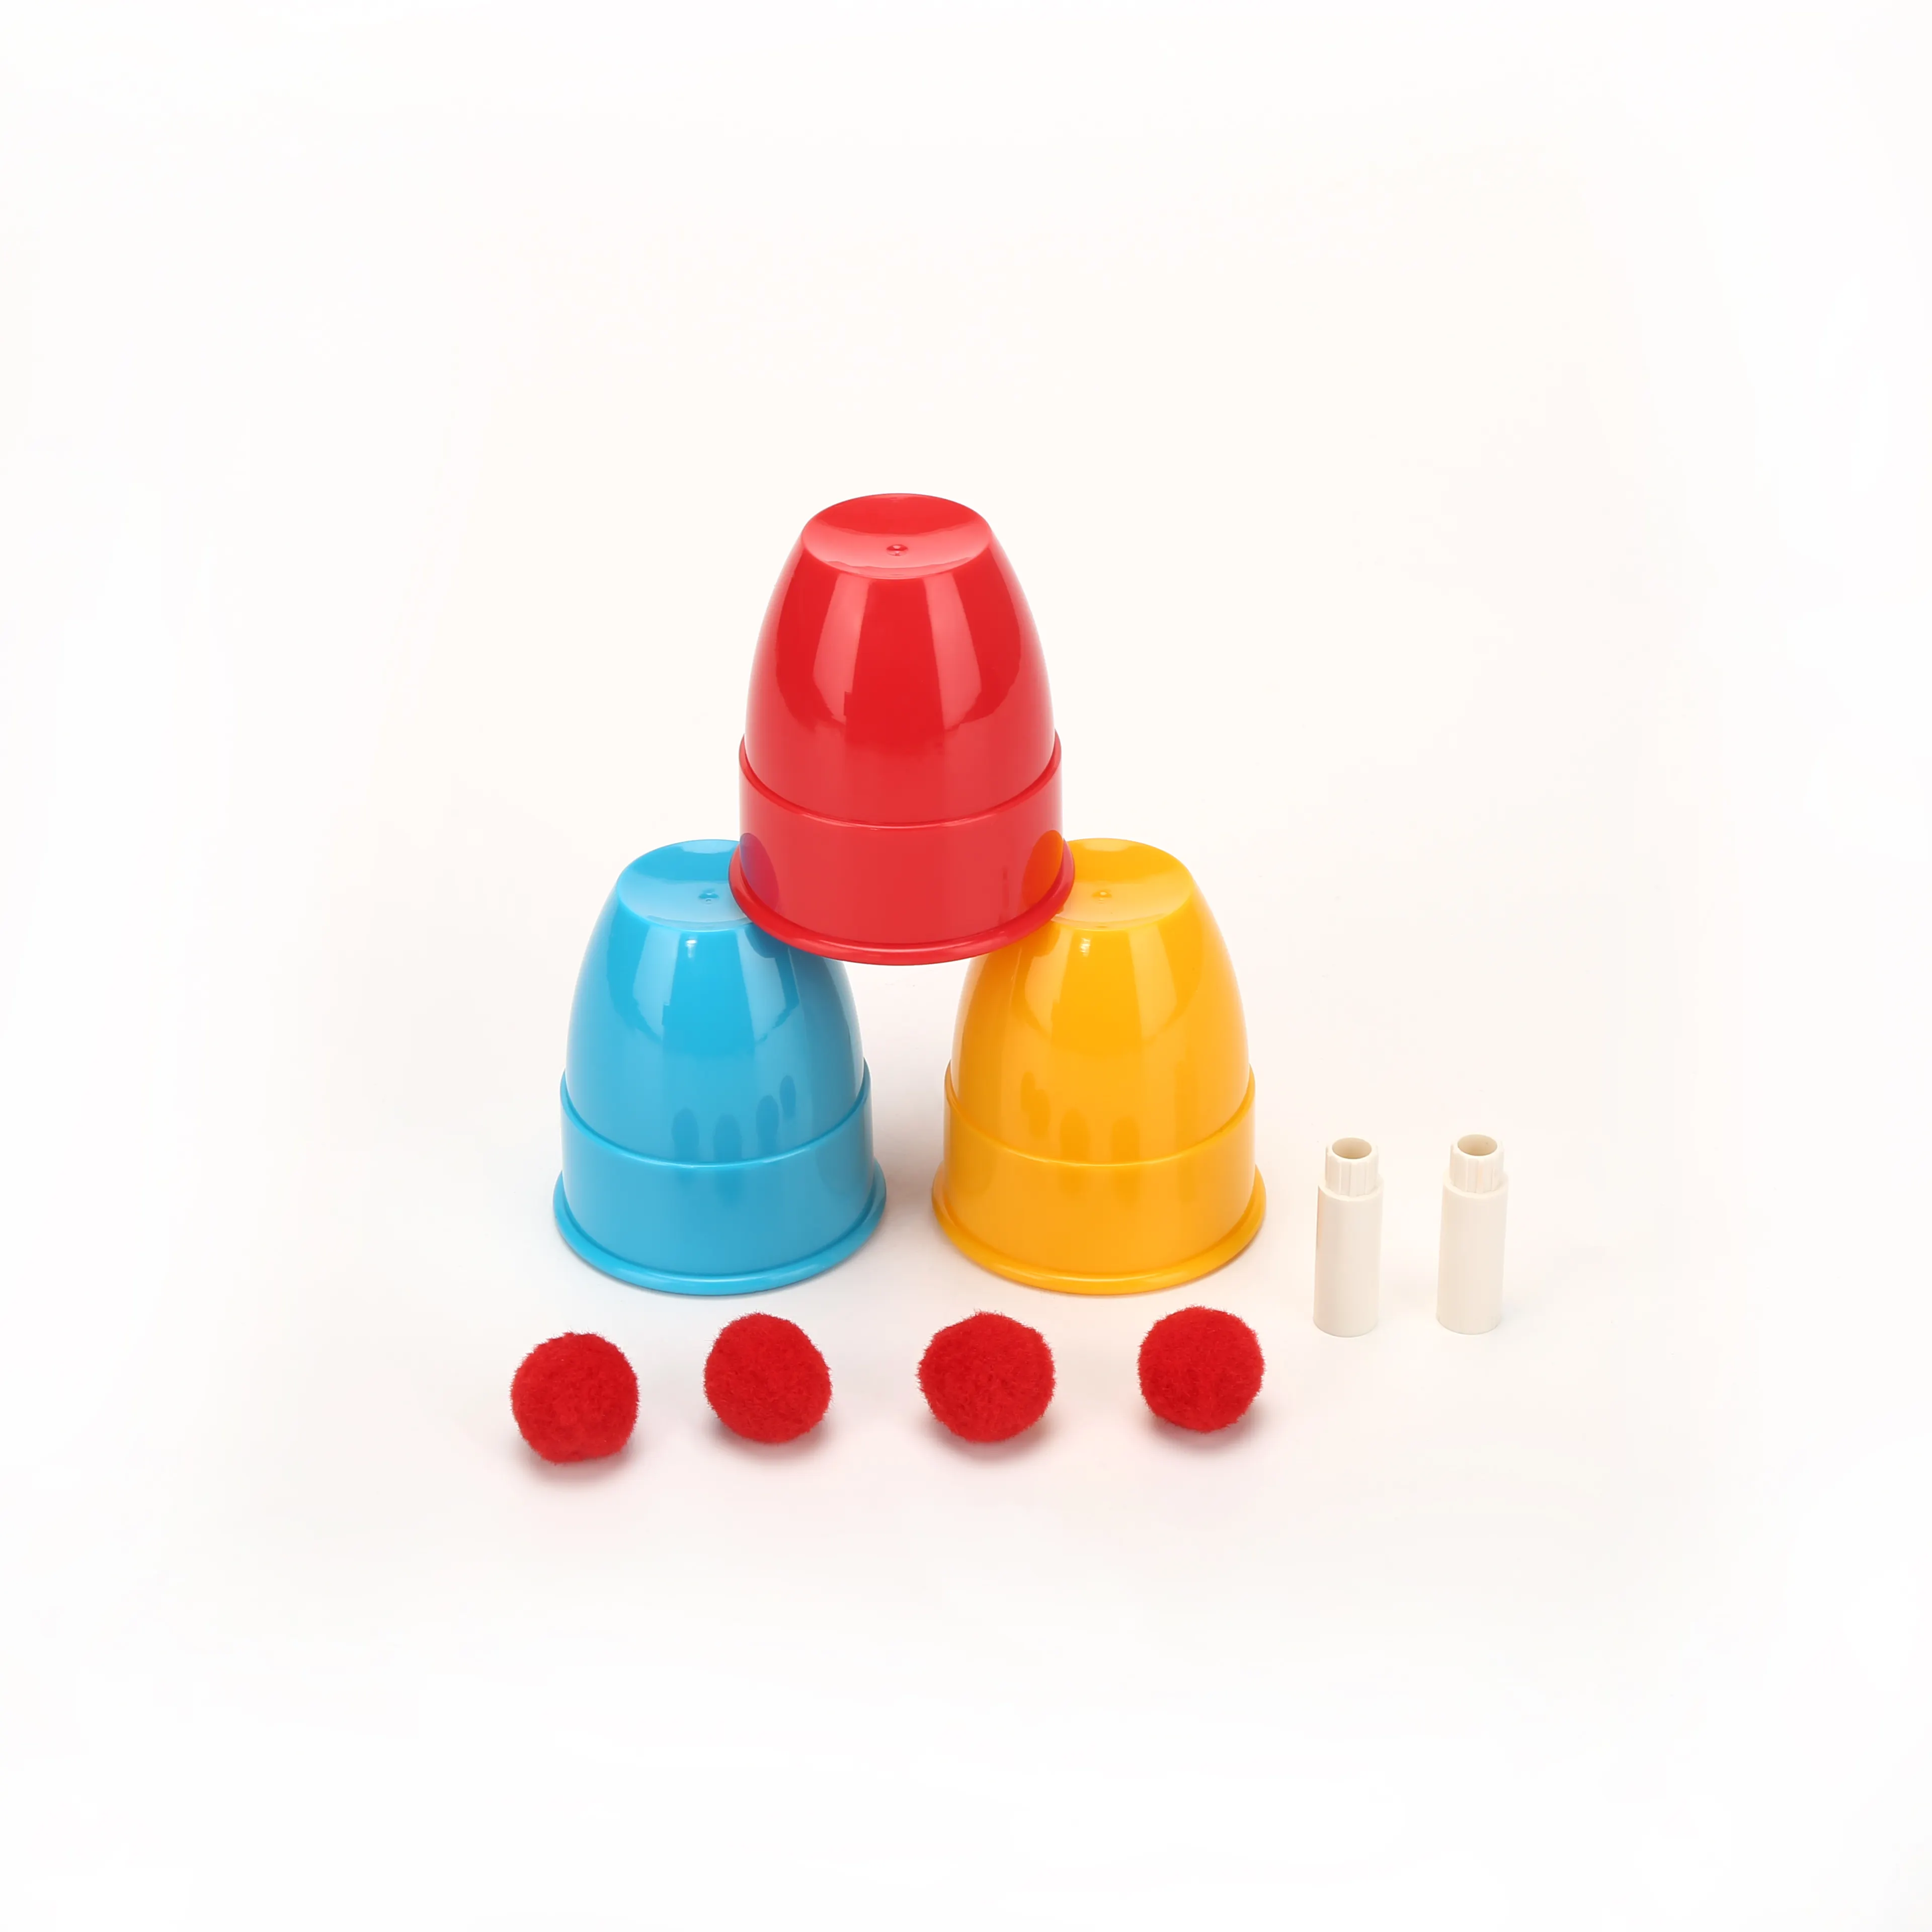 MFH Thinking Training truques de mágica CUPS & BALLS intelectual magia esponja bola brinquedos